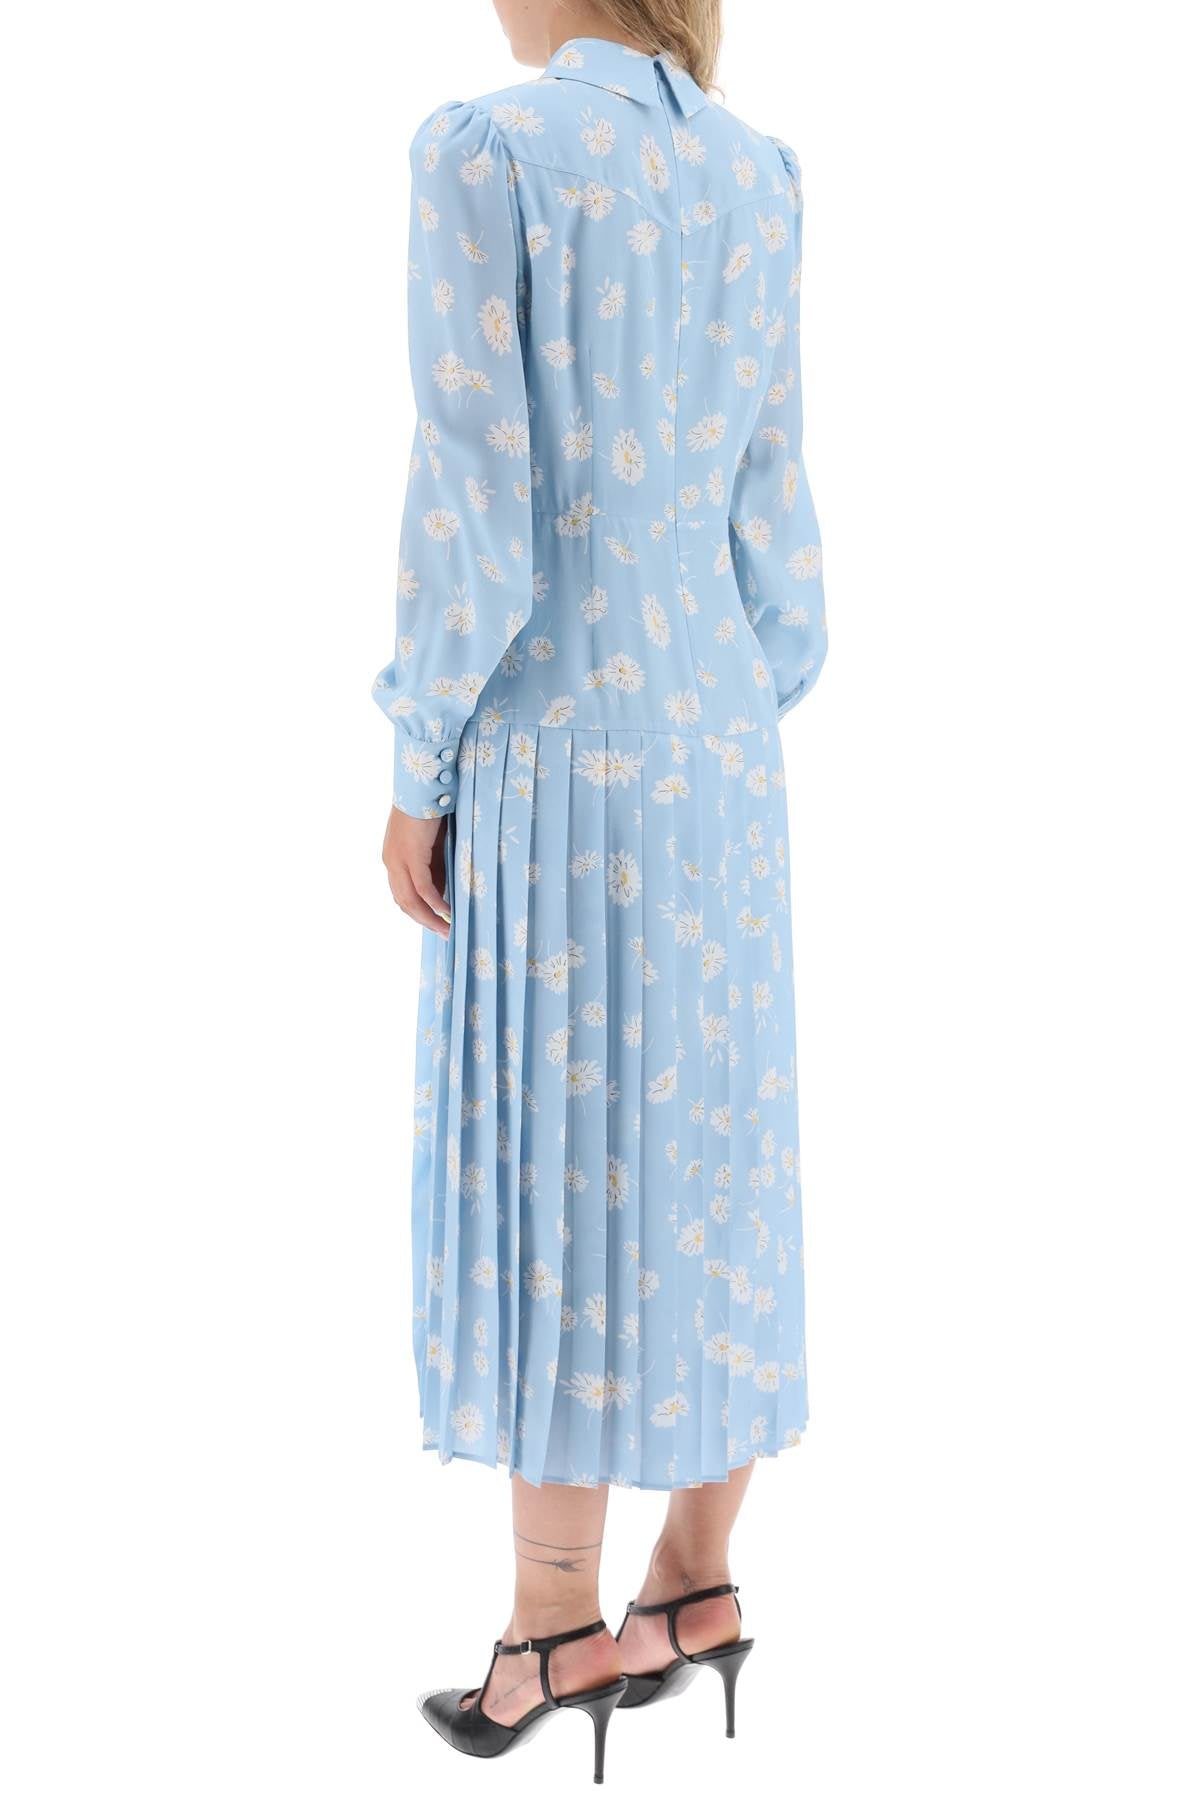 Alessandra rich crepe de chine shirt dress with daisy motif-women > clothing > dresses > midi-Alessandra Rich-40-Light blue-Urbanheer